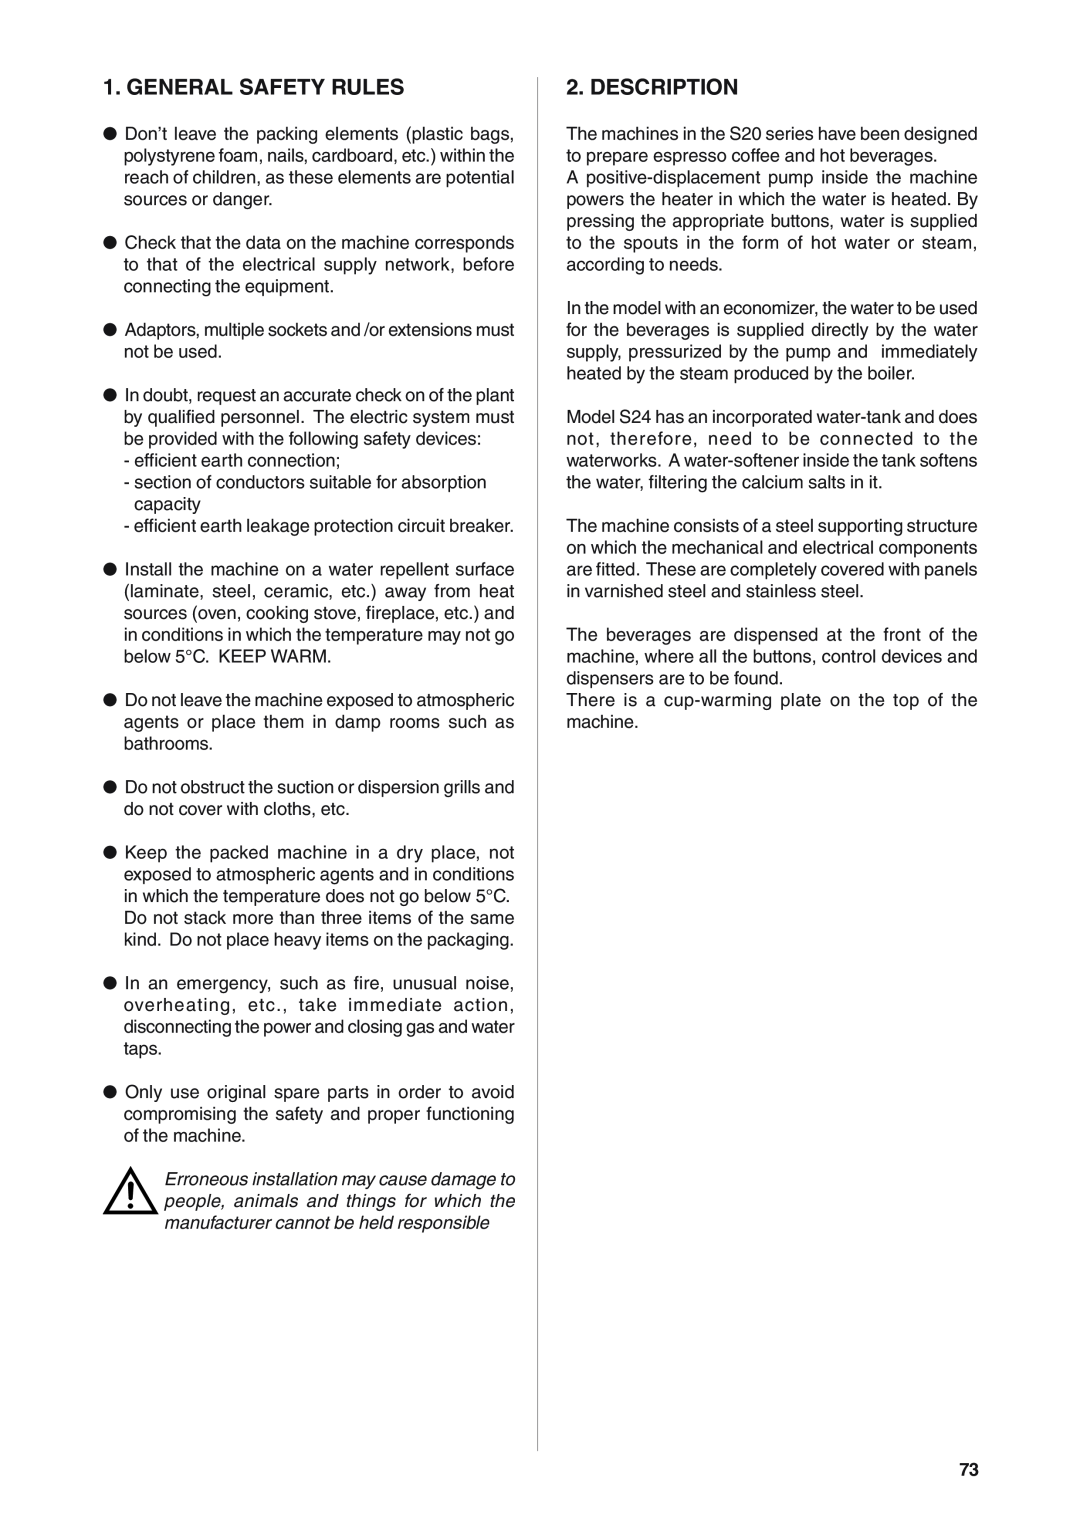 Rancilio S20 manual General Safety Rules, Description 